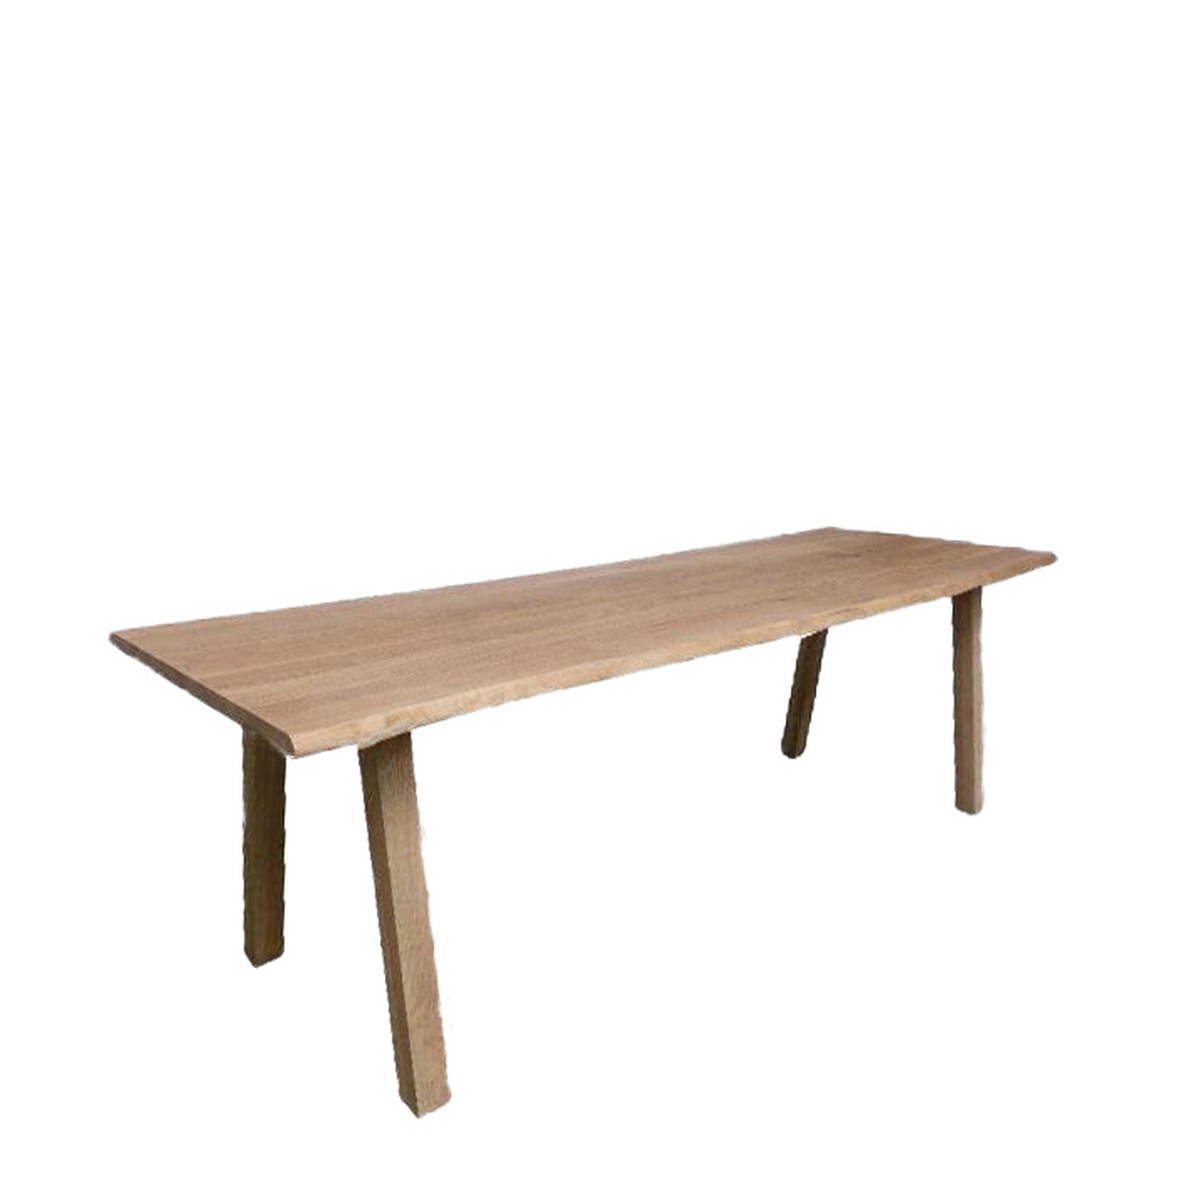   Table Alta Trunk rectangulaire  160x100x77cm